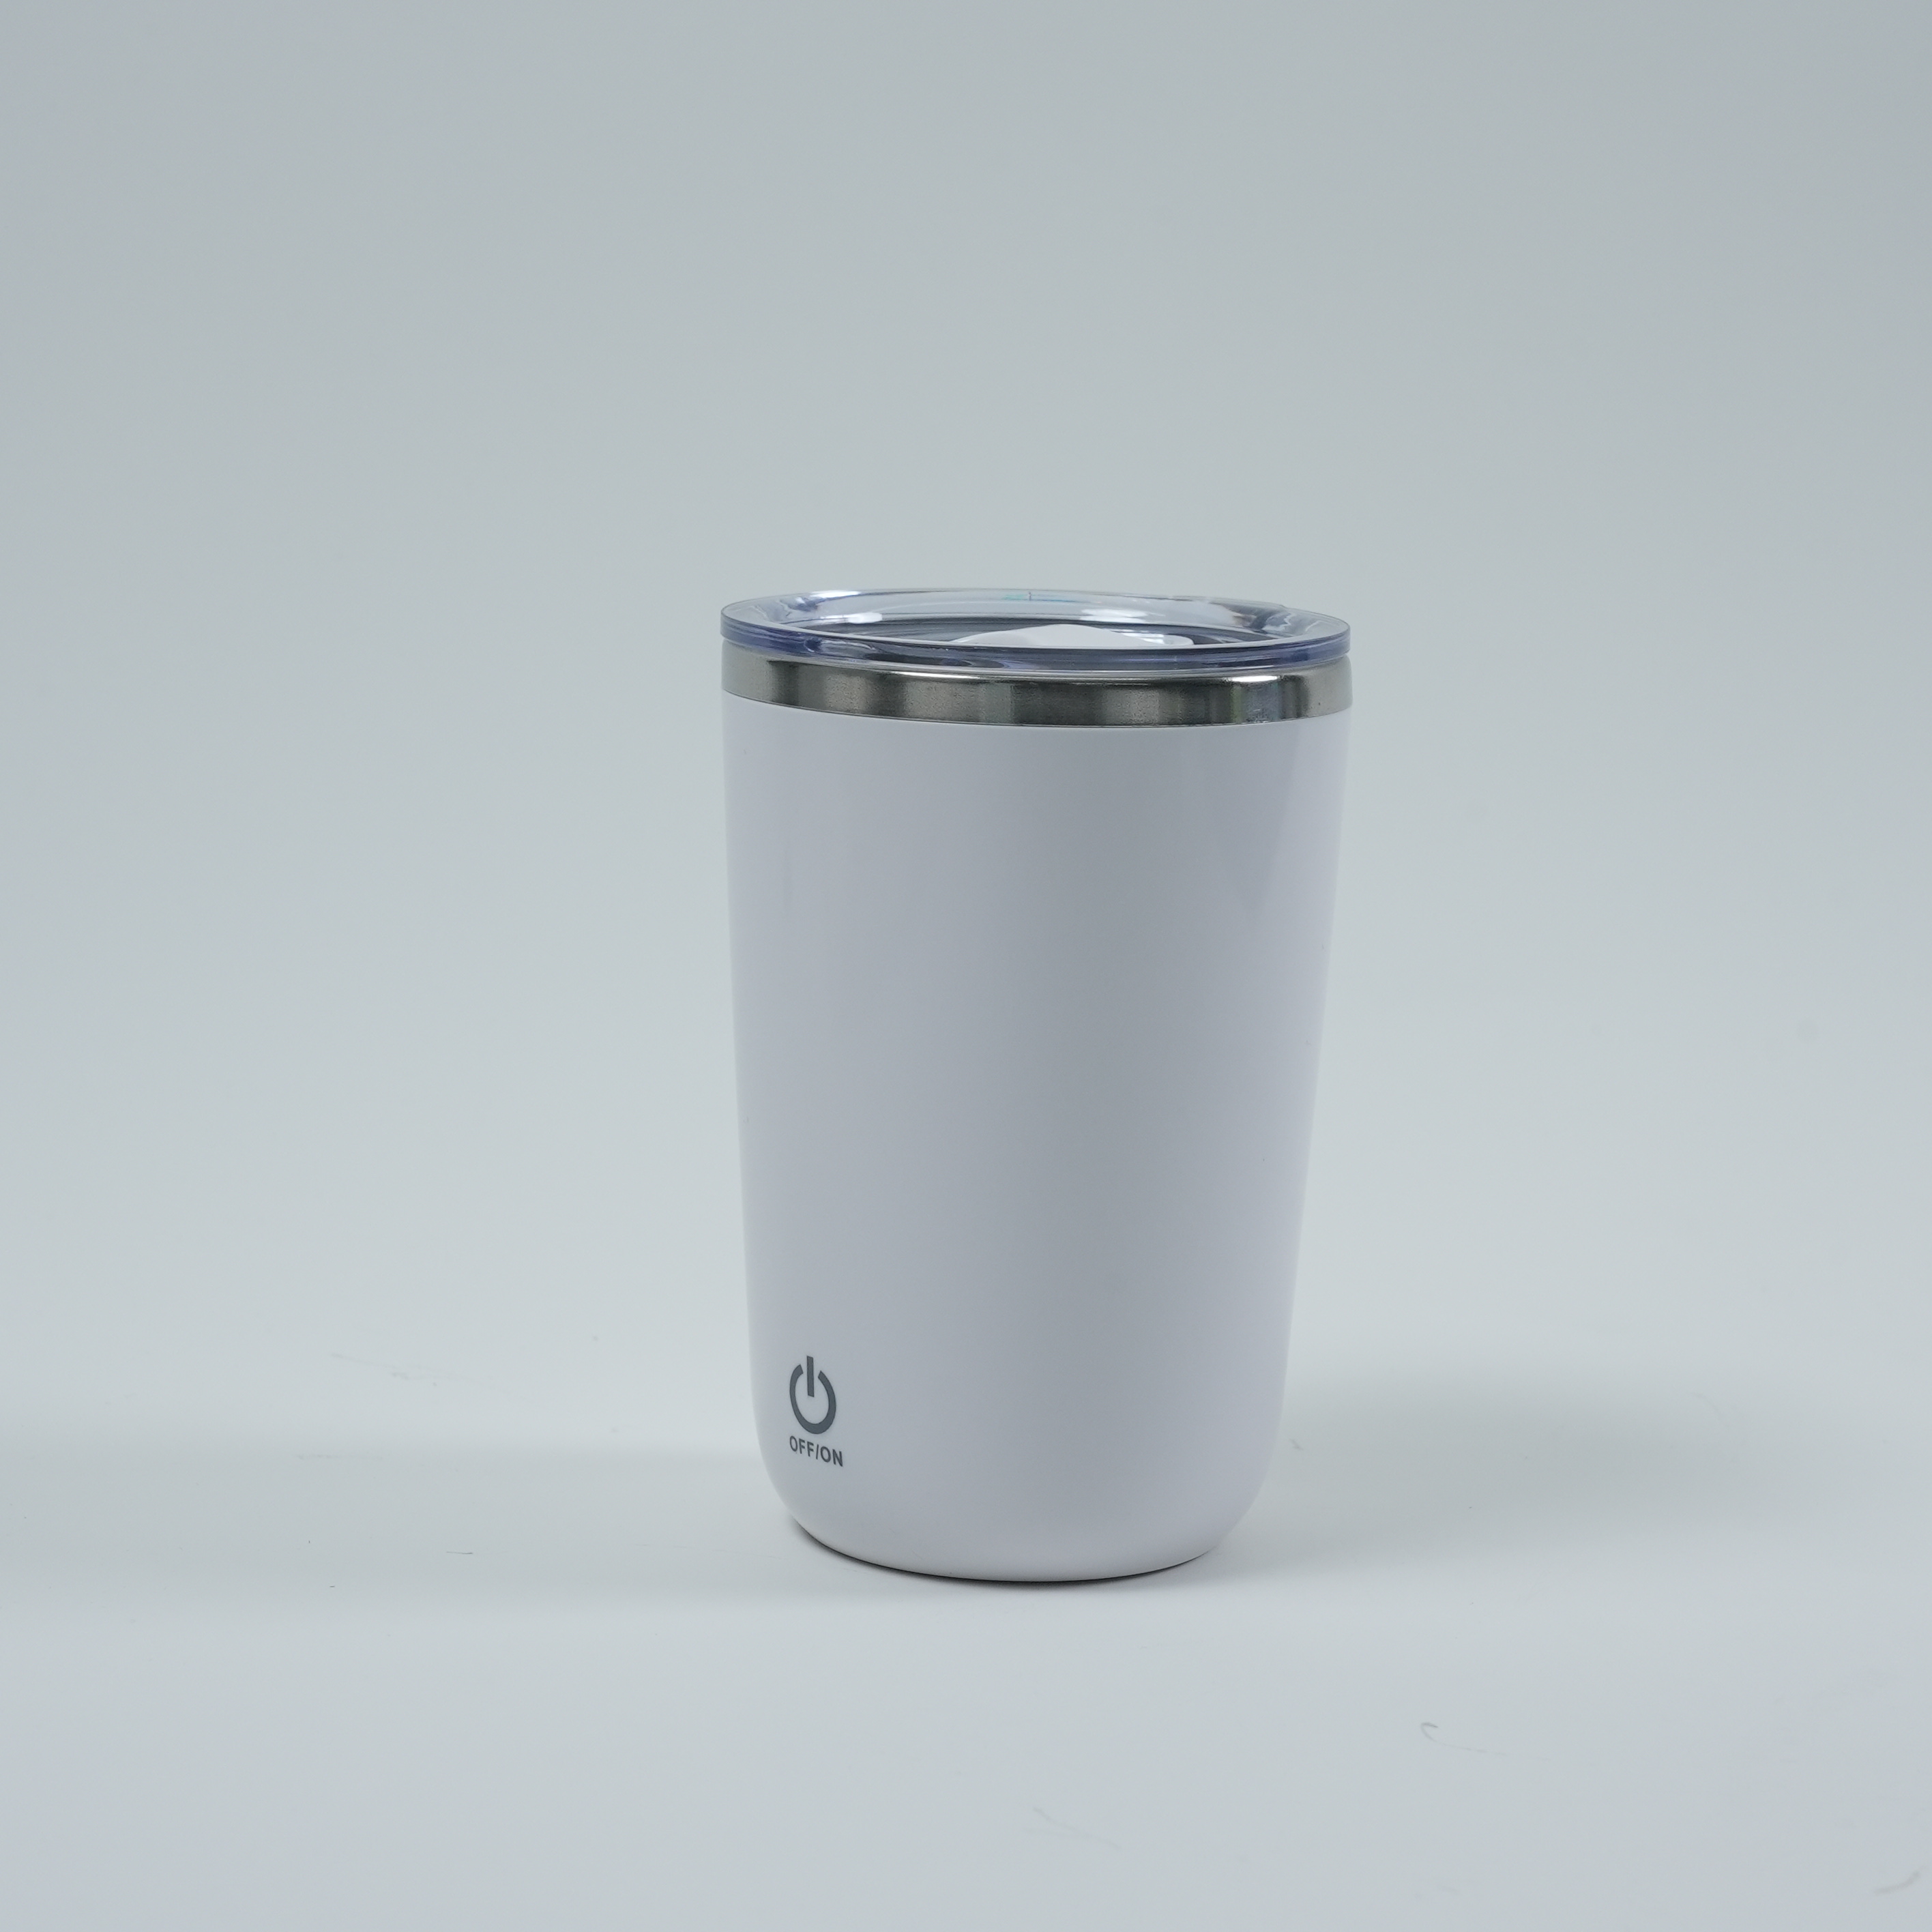 『350ml』自動磁気式ミルクカップ、マグカップ、防水、静音、怠惰な人用！|undefined